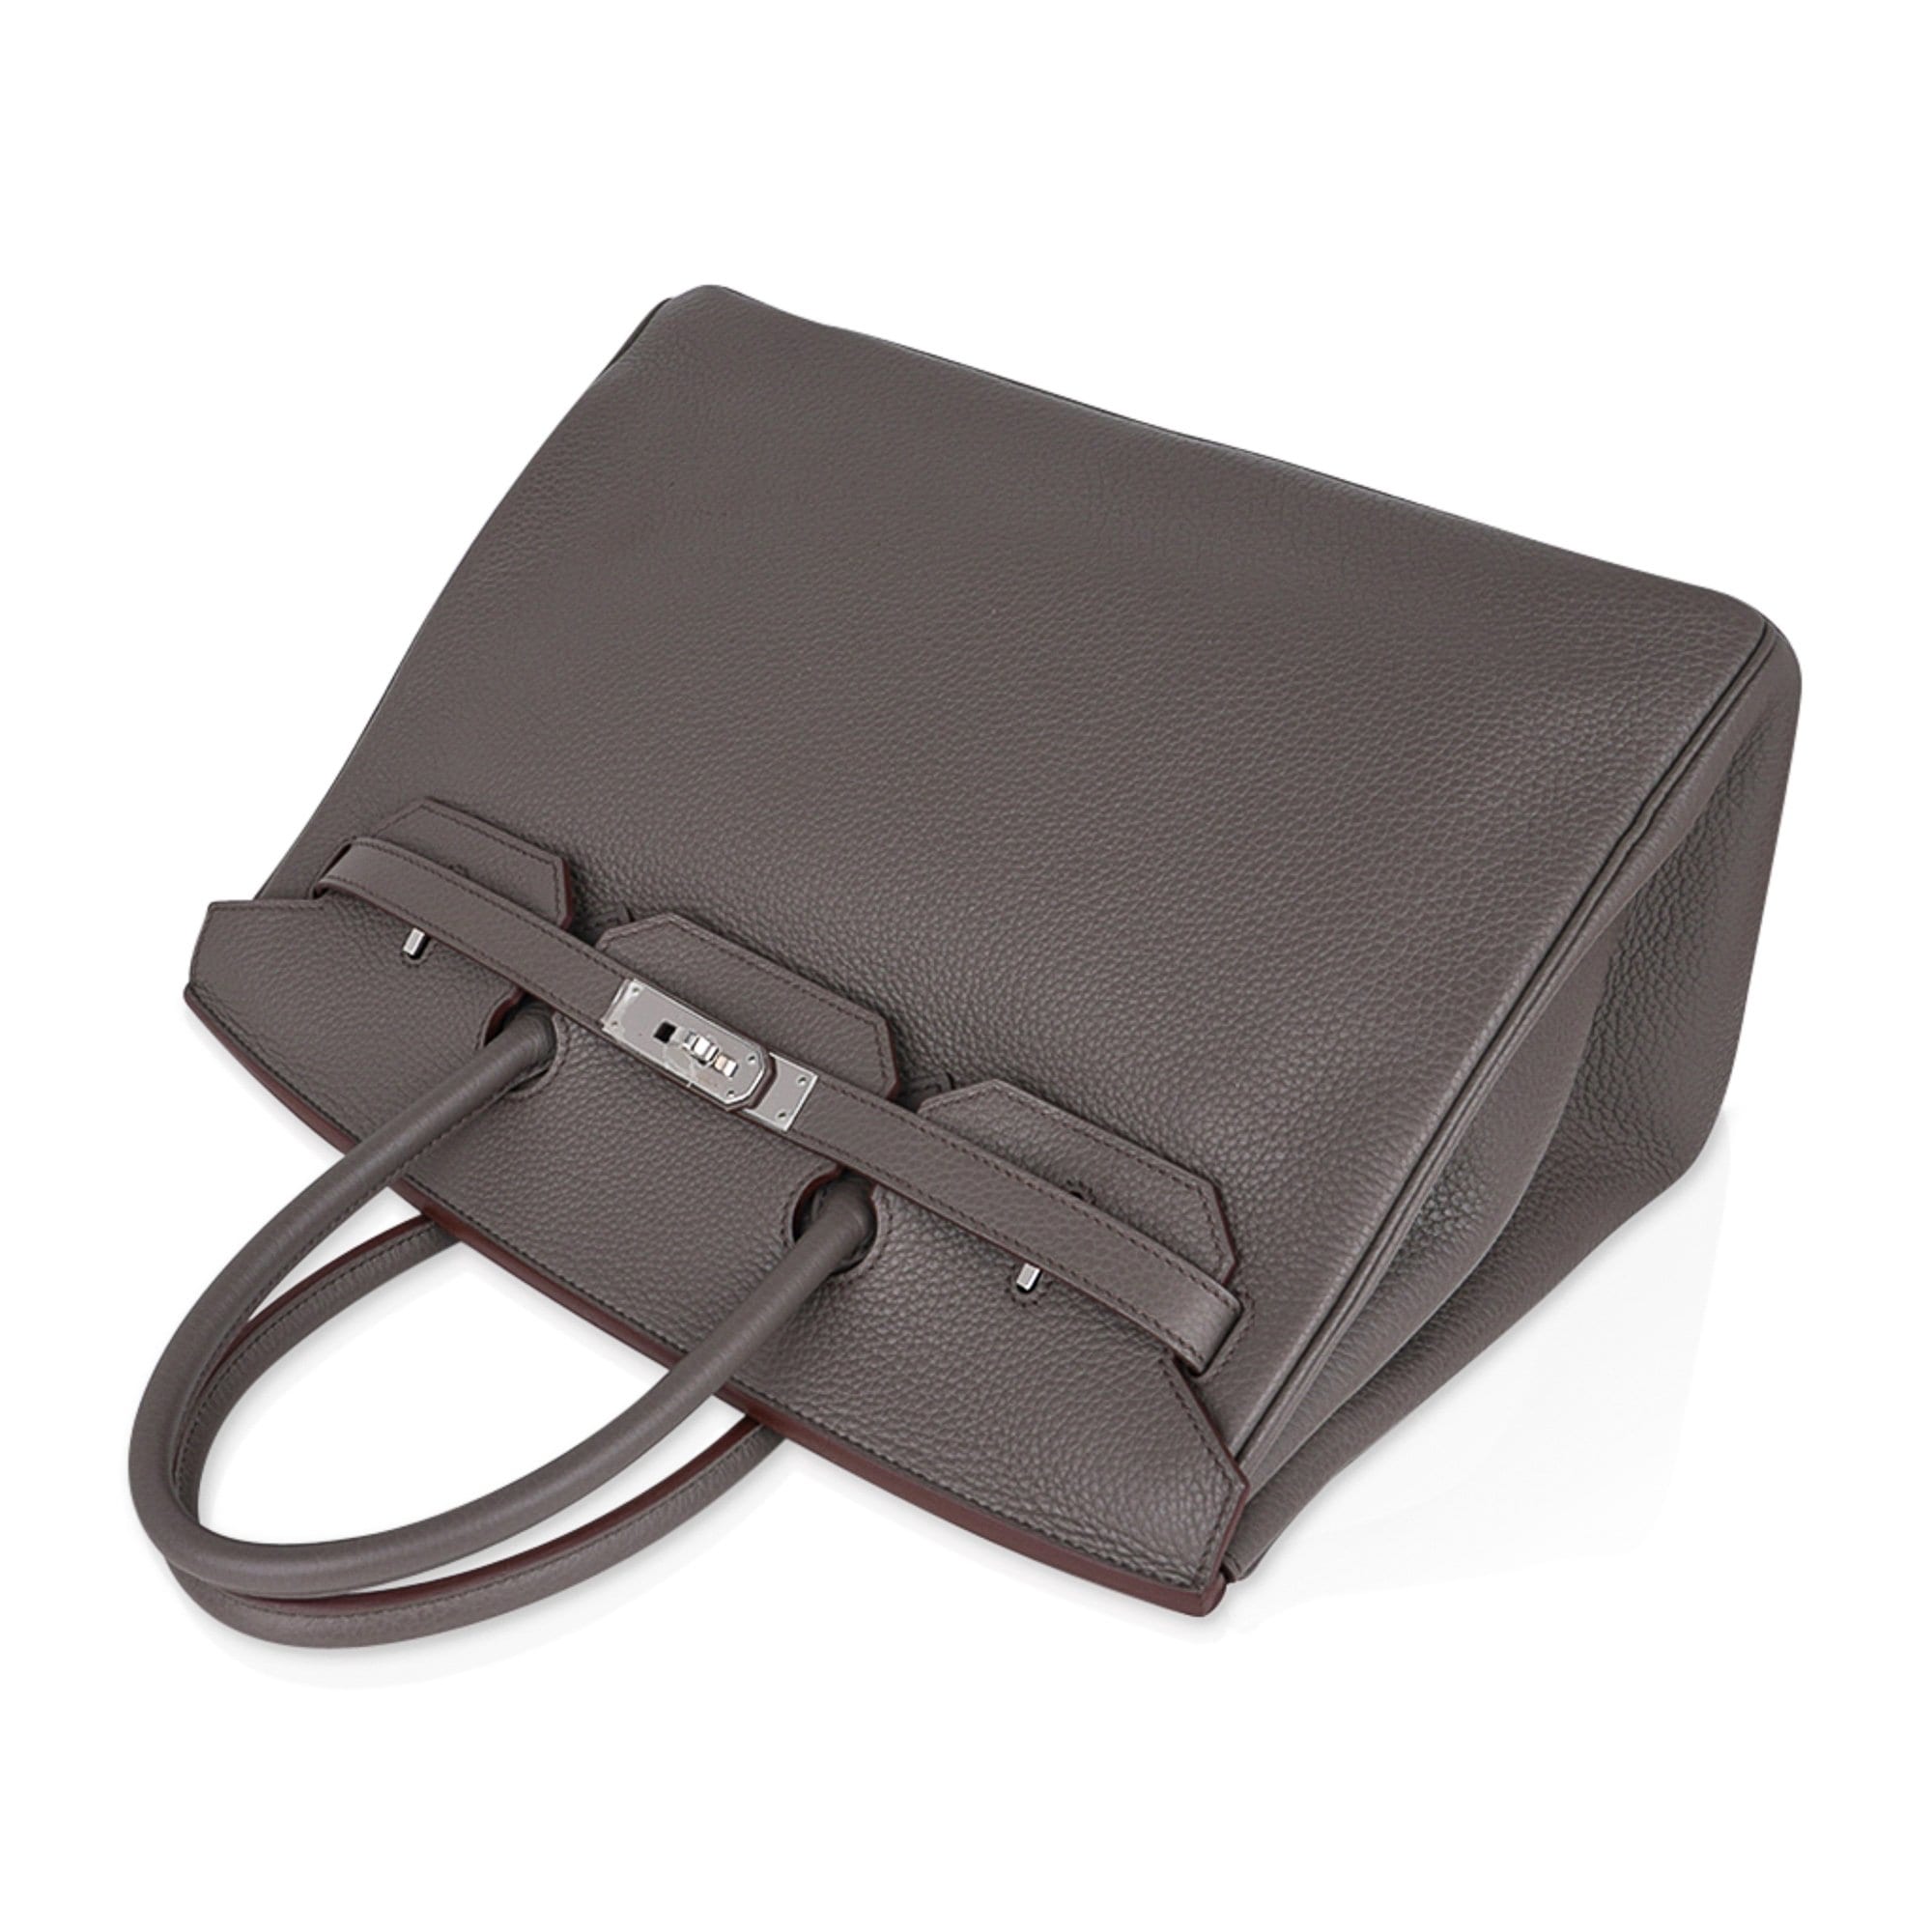 Hermès Birkin Handbag 354256